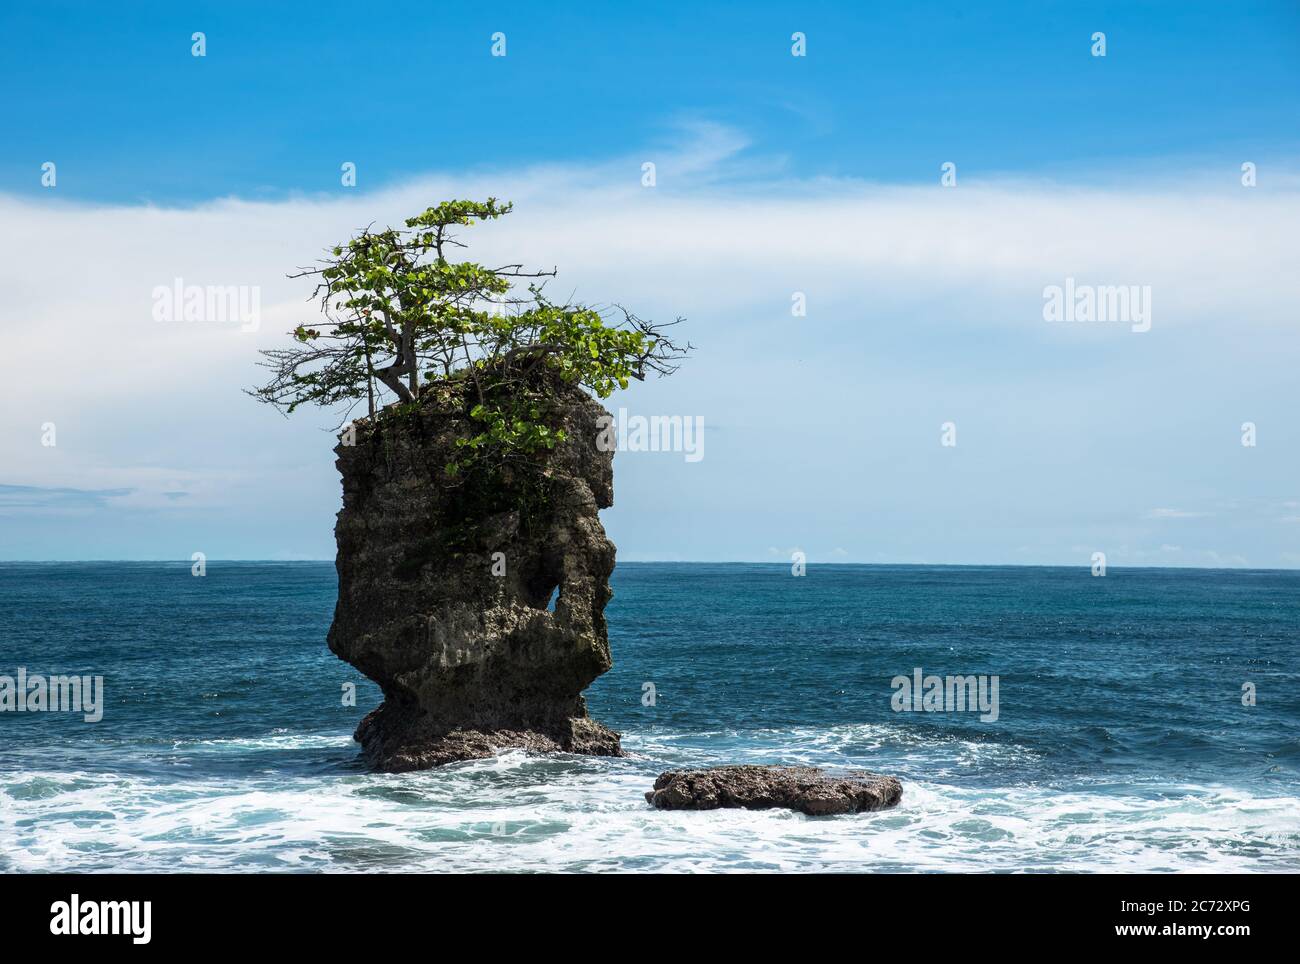 Lonely Rock, Cliff Stone formation with single tree, Costa Rica refugio Manzanillo, Caribbean sea, Latin Central America, beautiful small Island Stock Photo